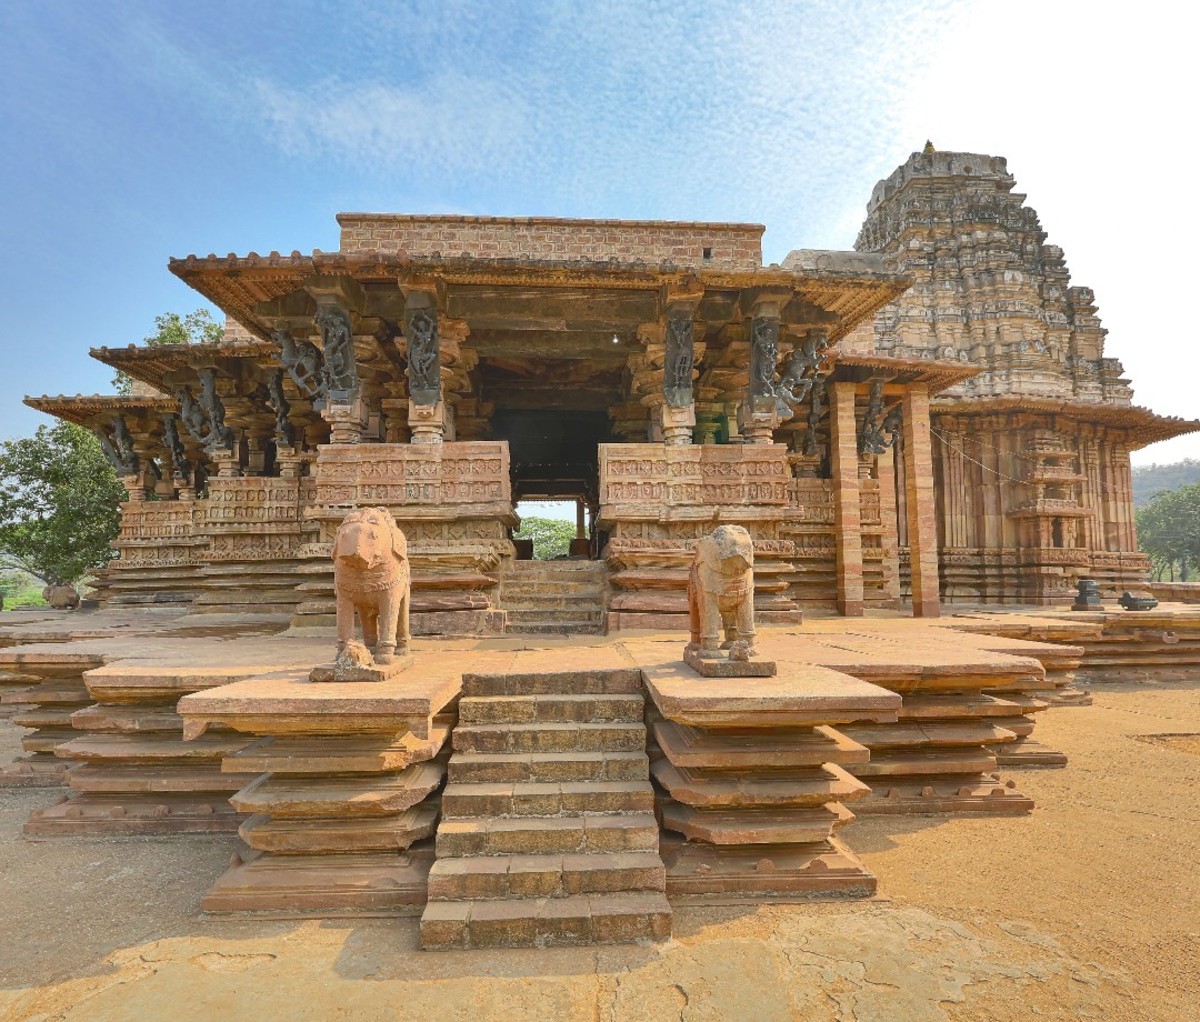 An image of an entrance in the Kakatiya Rudreshwara Temple in India.